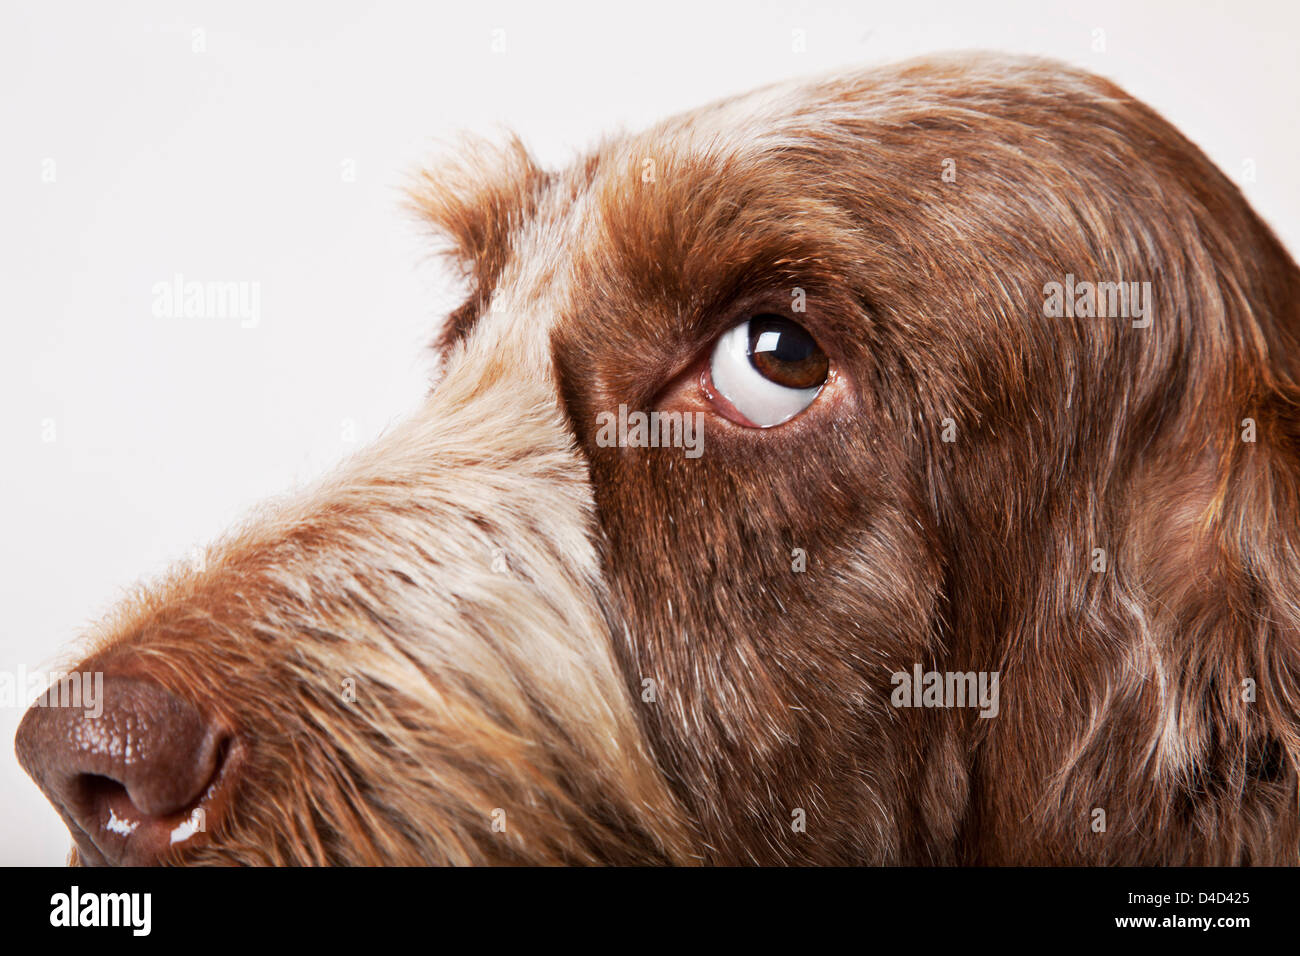 Close up of dog’s face Stock Photo